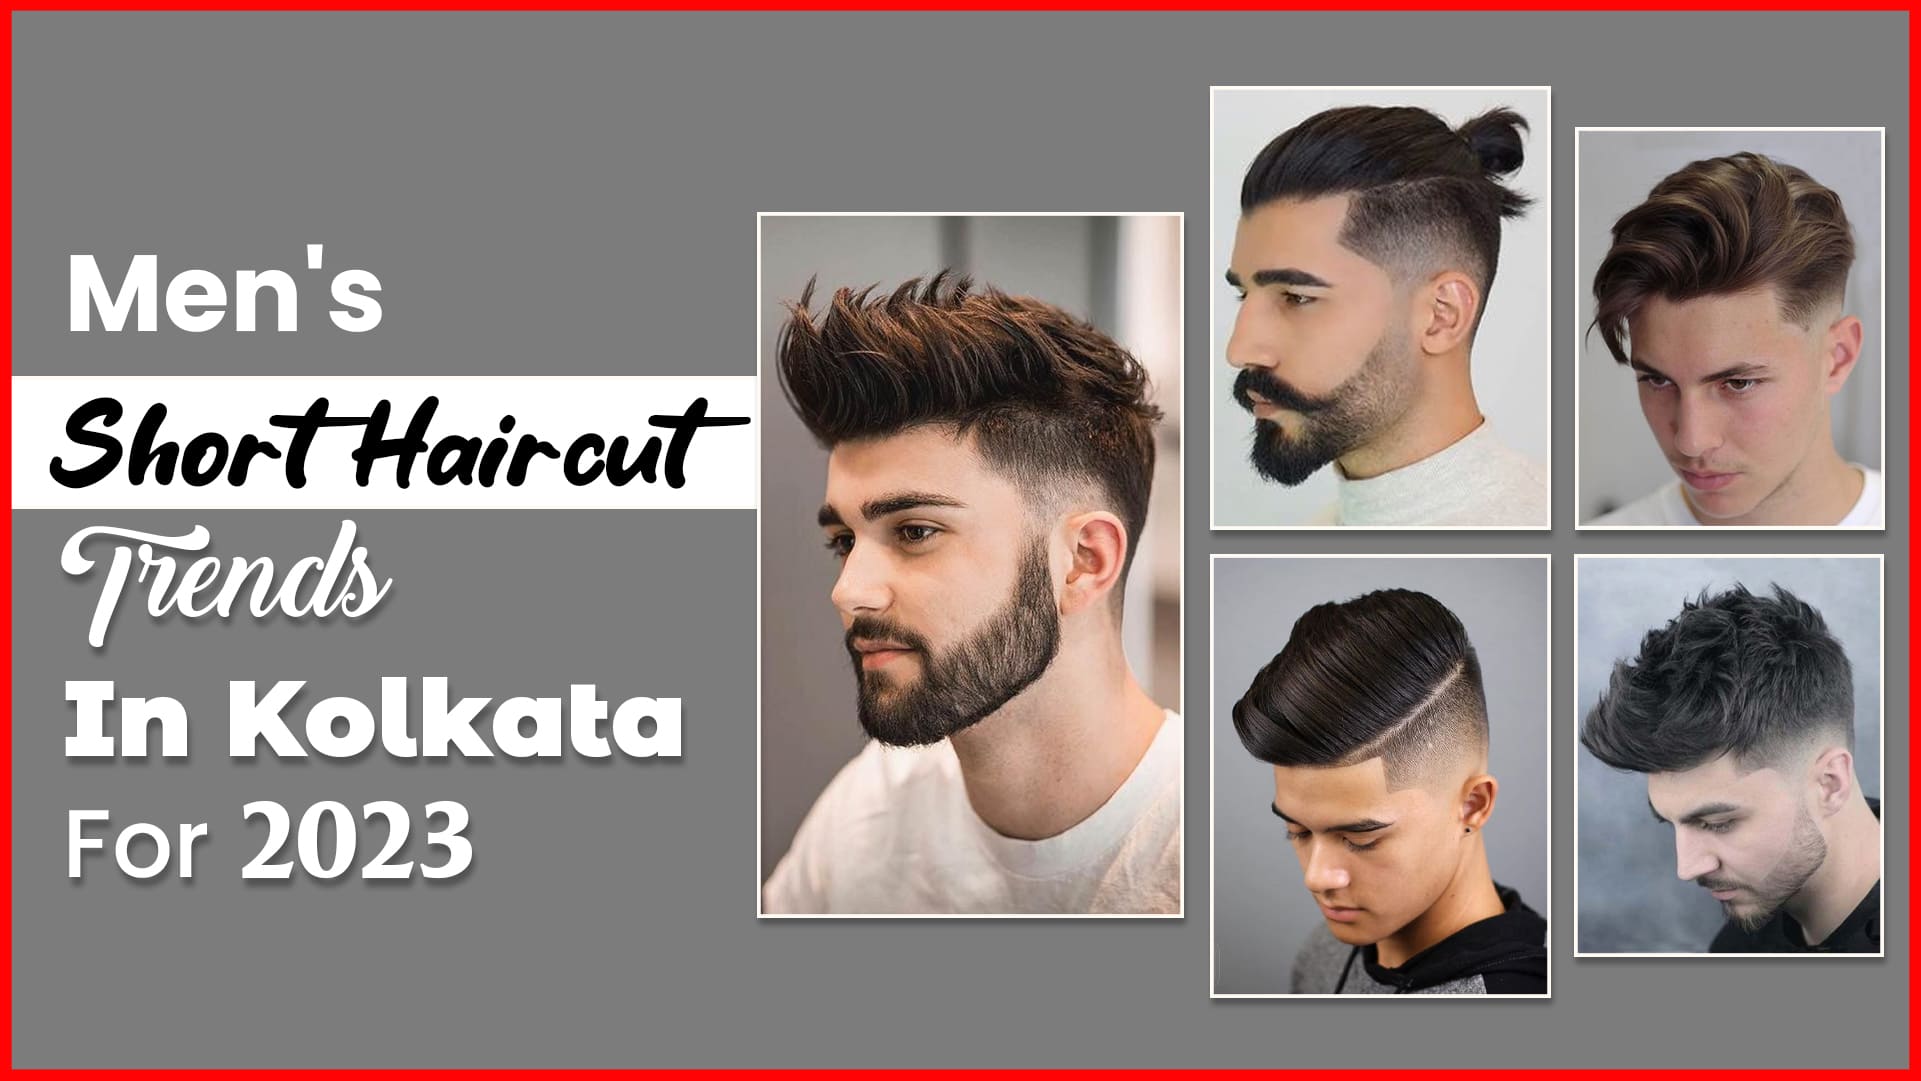 Men's short haircut trends in Kolkata for 2023